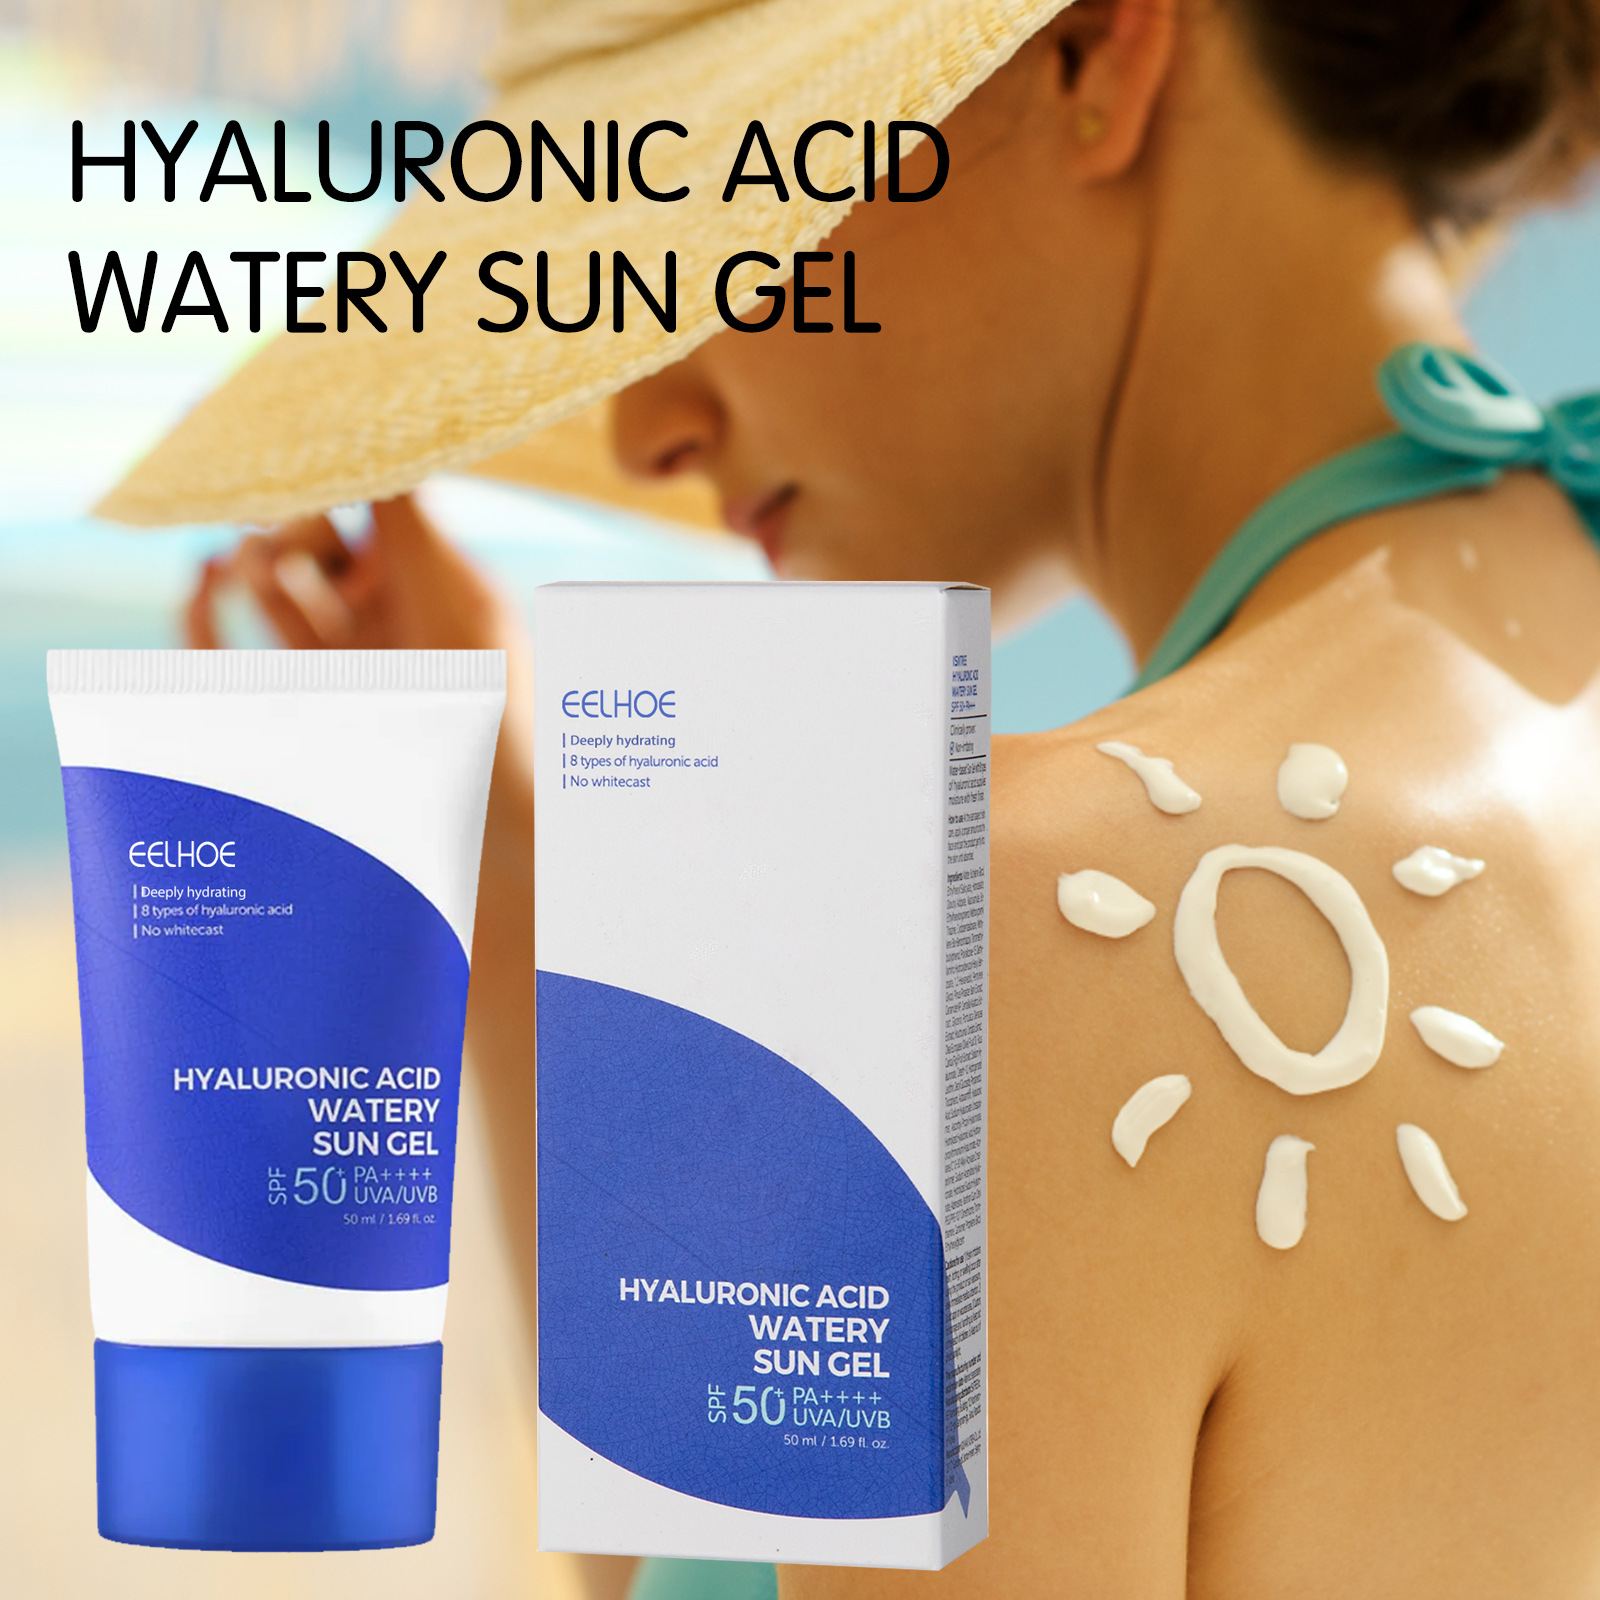 621498318744ad736b0071b2c241cb42 50ml Hyaluronic Acid Moisturizing Watery Sun Gel SPF50+ Protective Gel Hydrating Protective Gel Women Body Face Sunscreen Cream